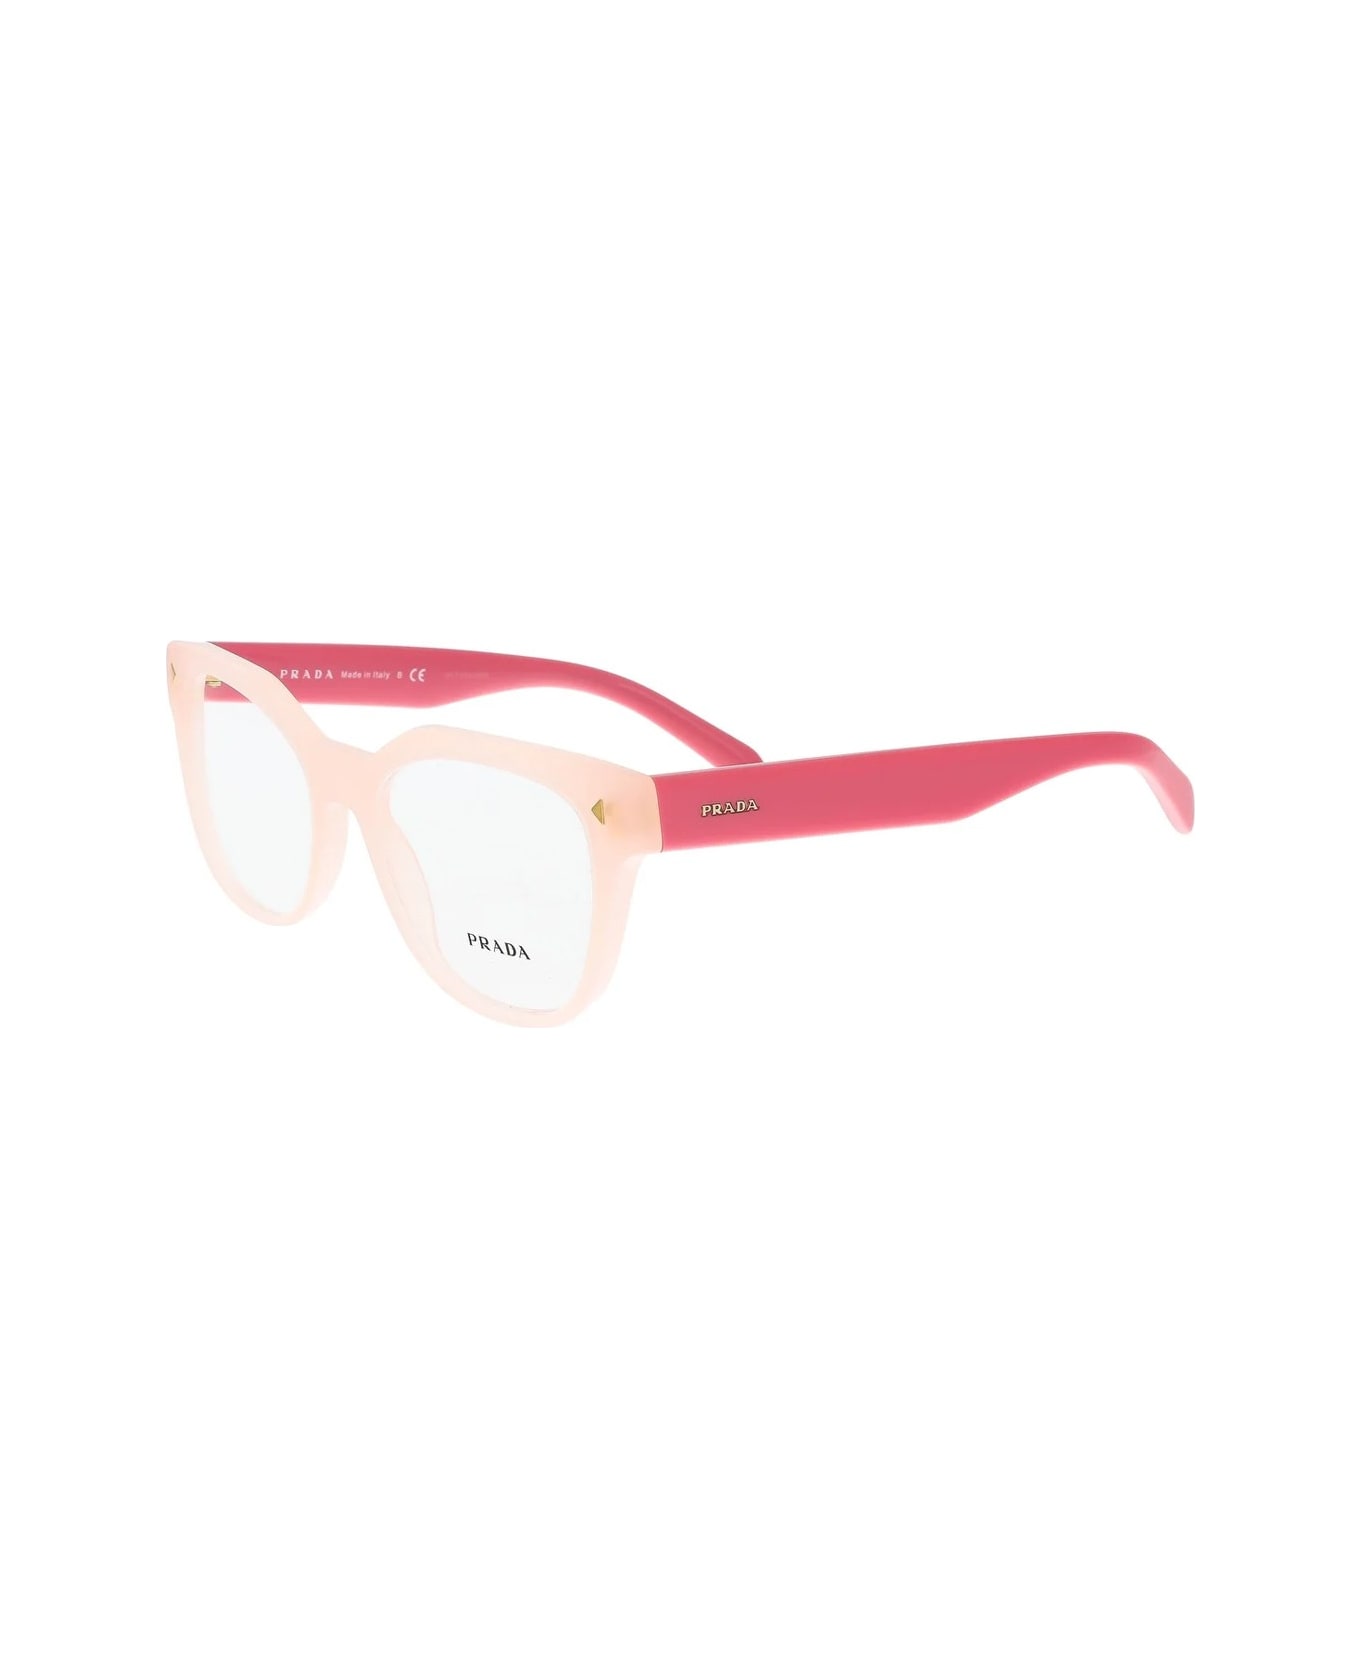 Prada Eyewear Pr 21sv Glasses - Rosa